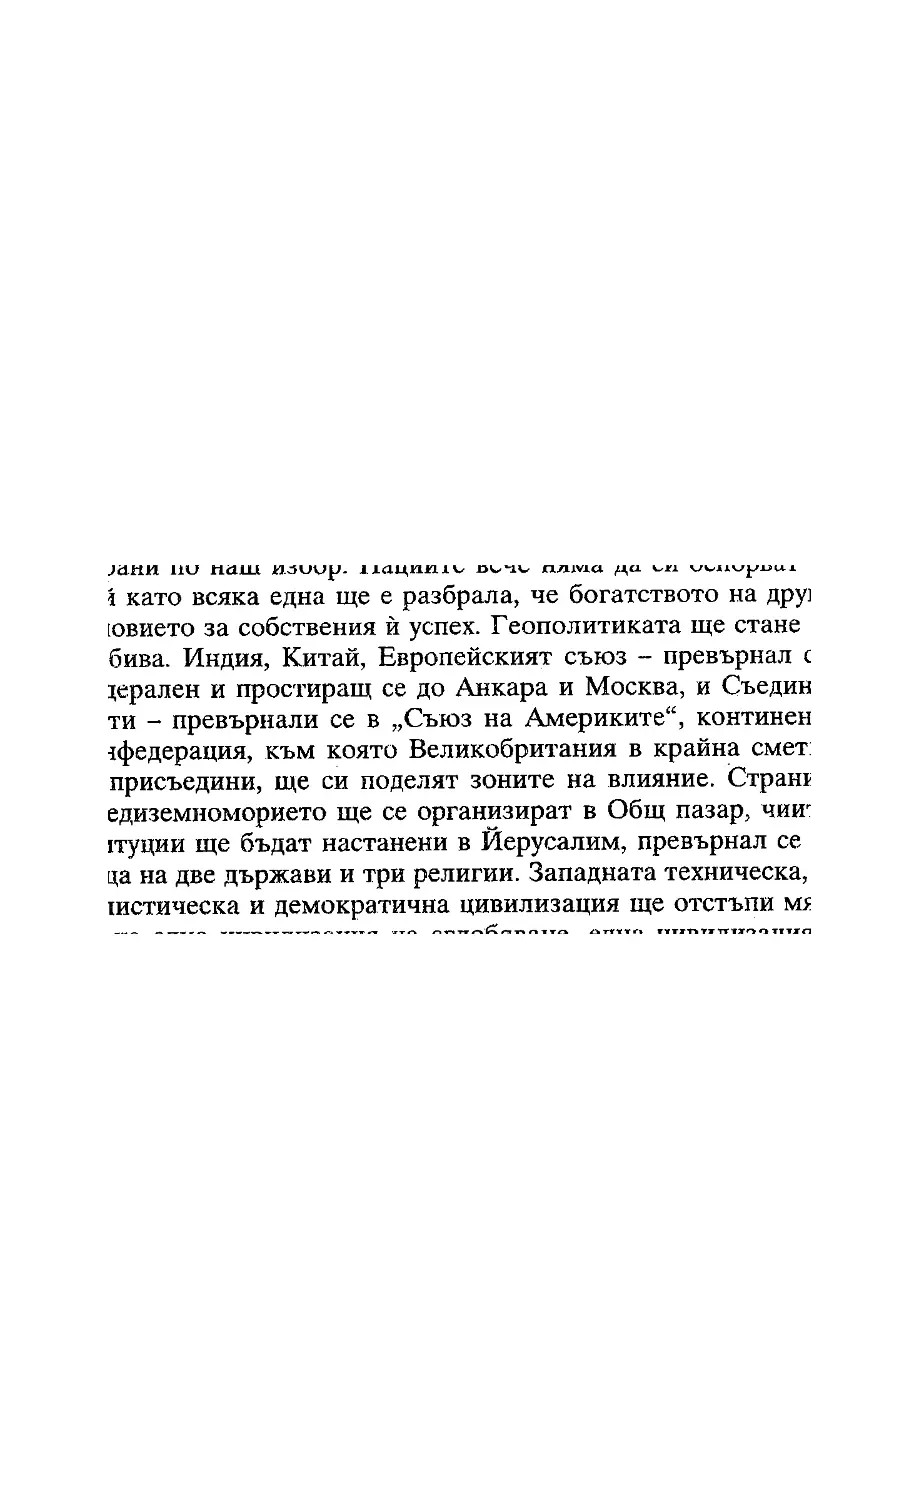 ﻿Жак Атали. Речник на 21 век_Page_006_Image_0001_1